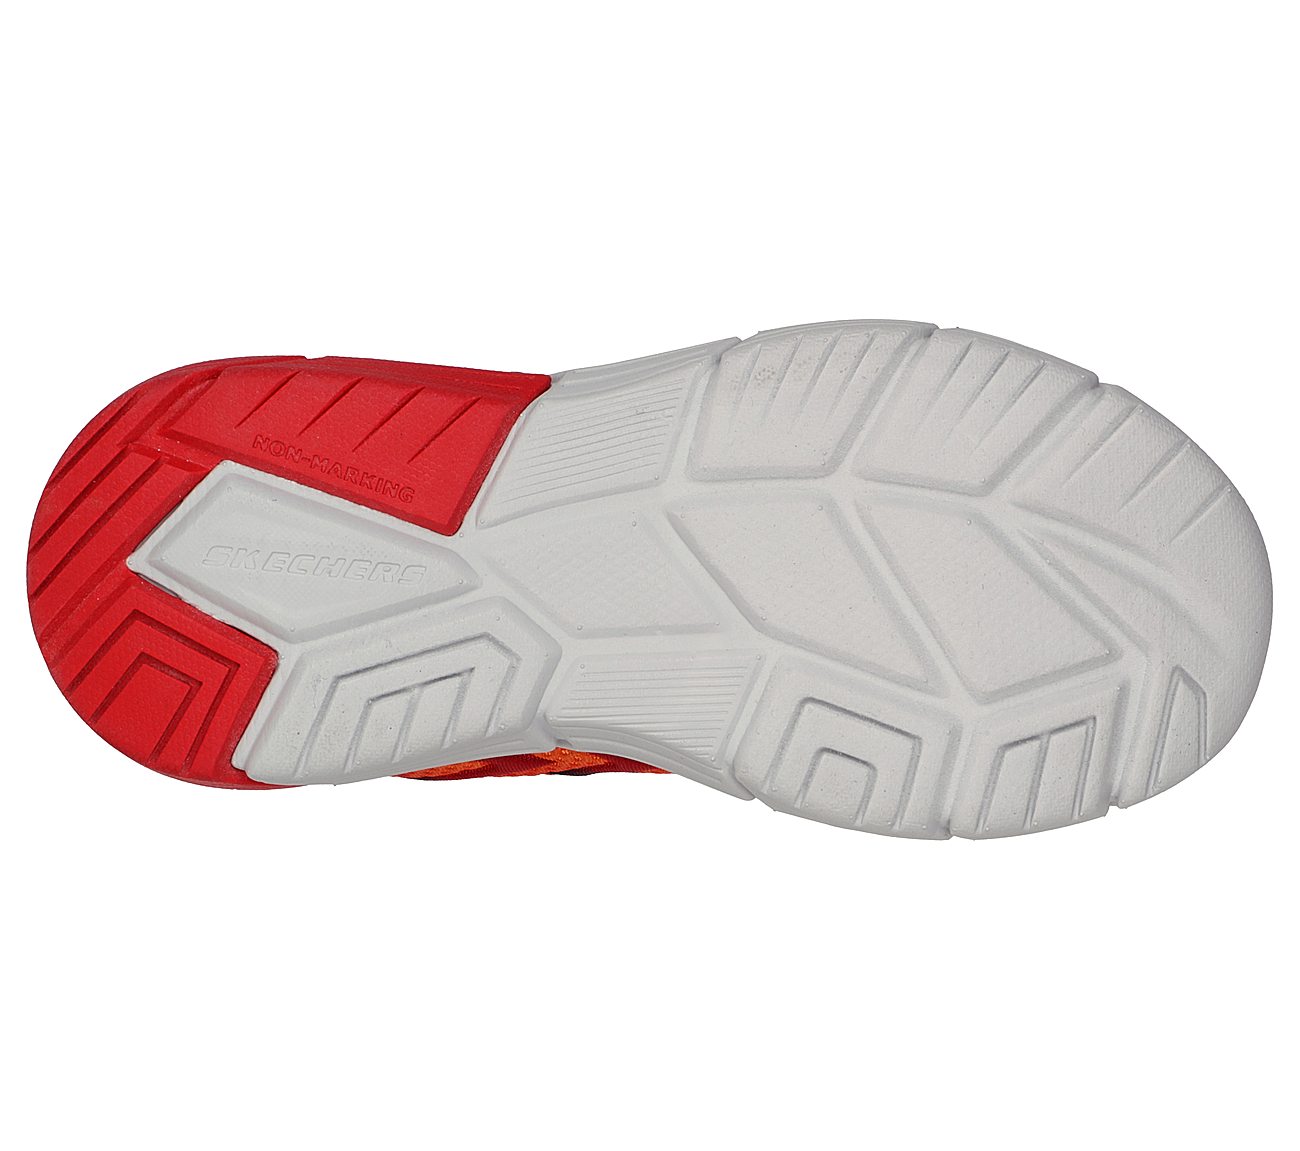 VECTOR-MATRIX - VOLTRONIK, RED Footwear Bottom View